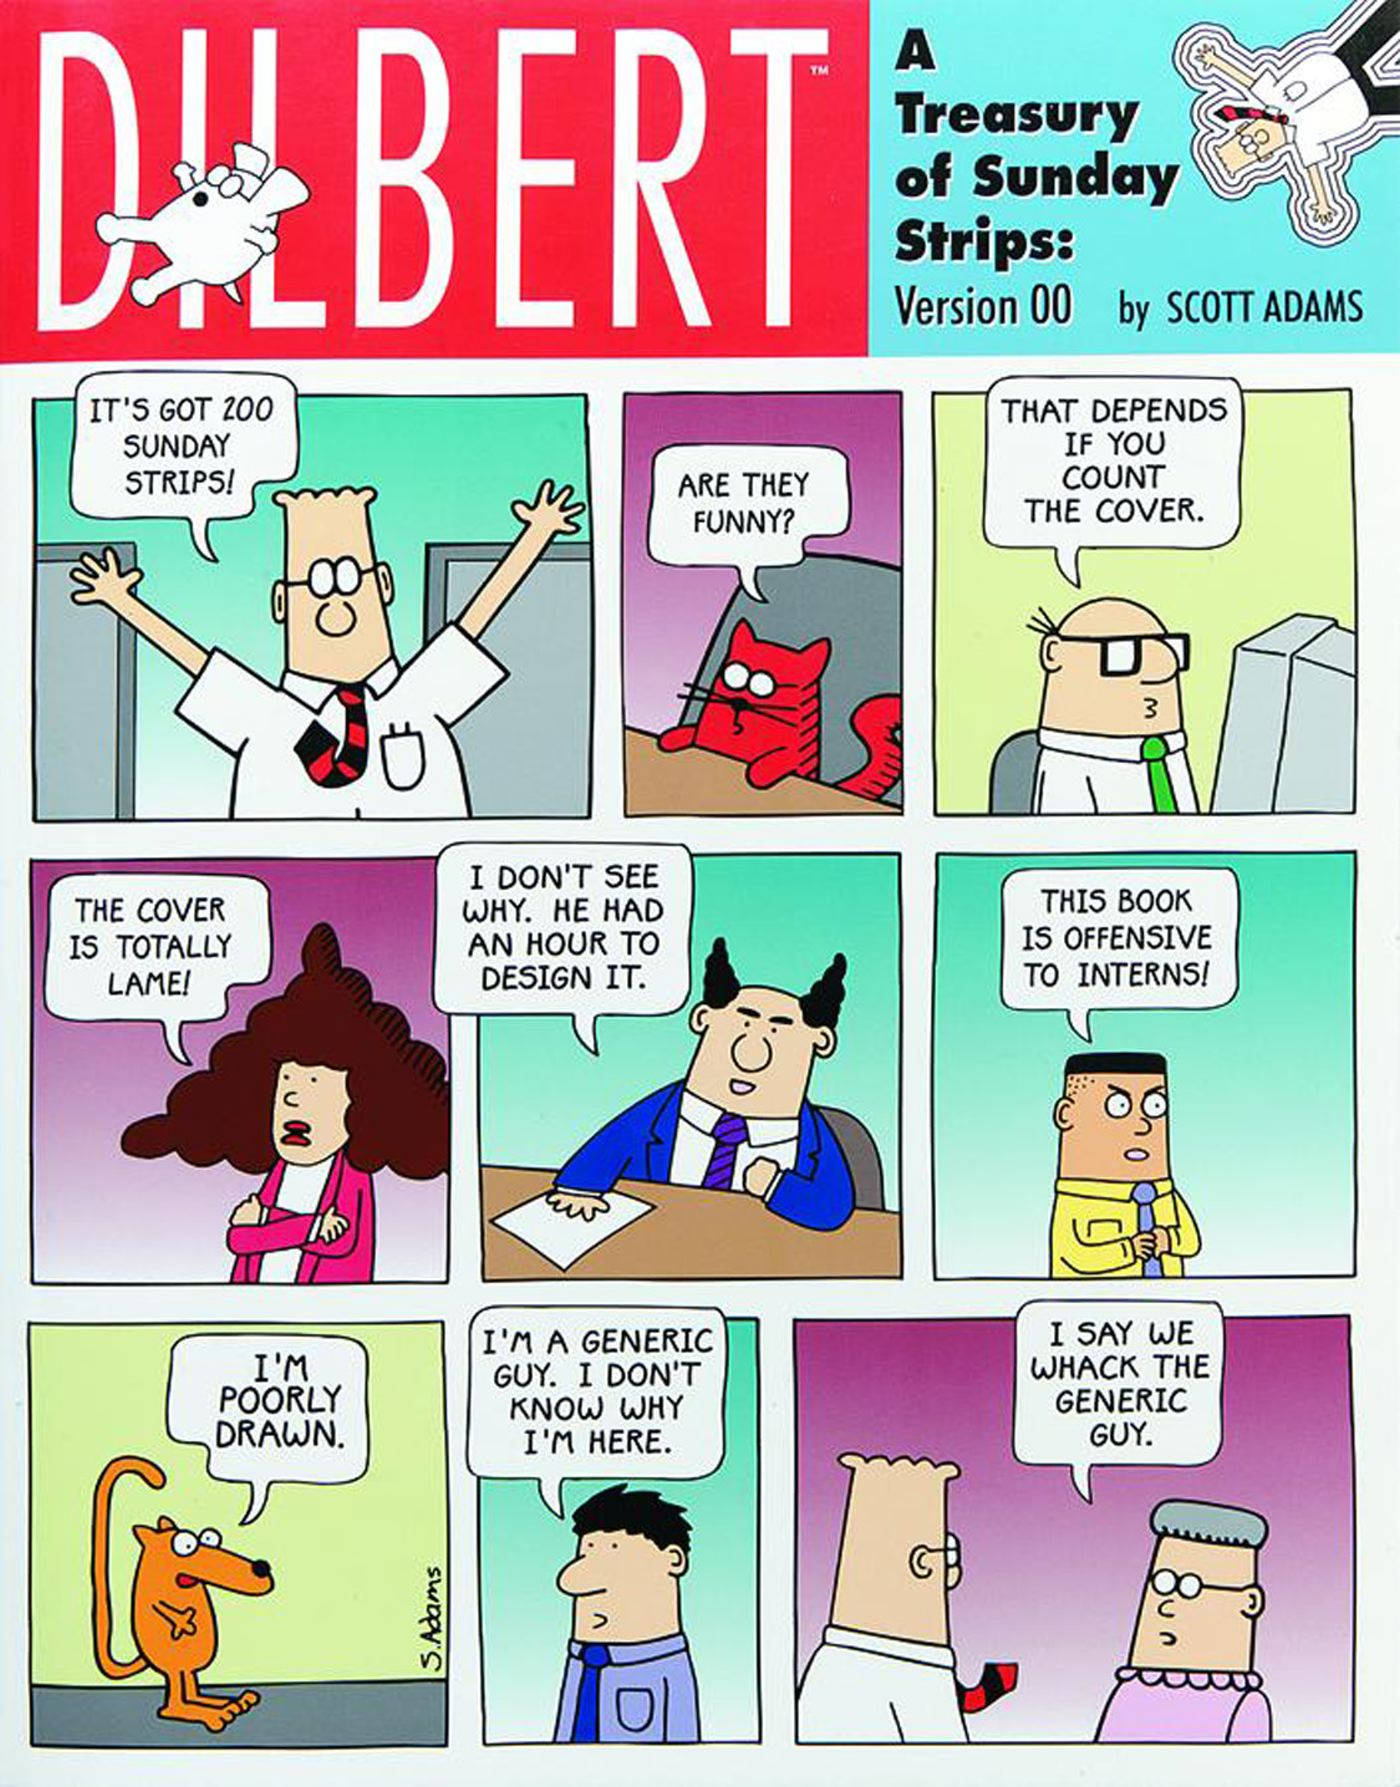 Dilbert Comic Strip Sunday Edition Wallpaper